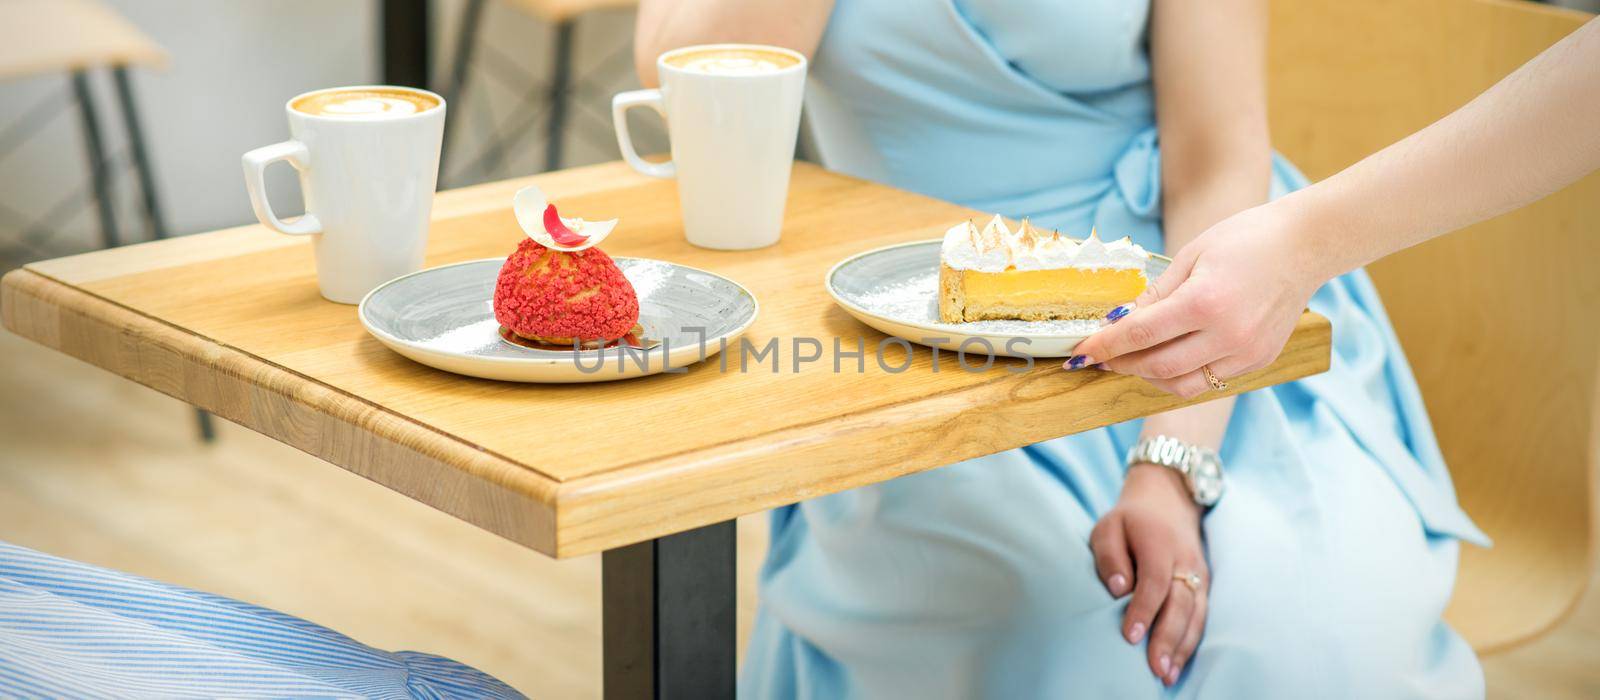 Waitress puts pastry on table by okskukuruza